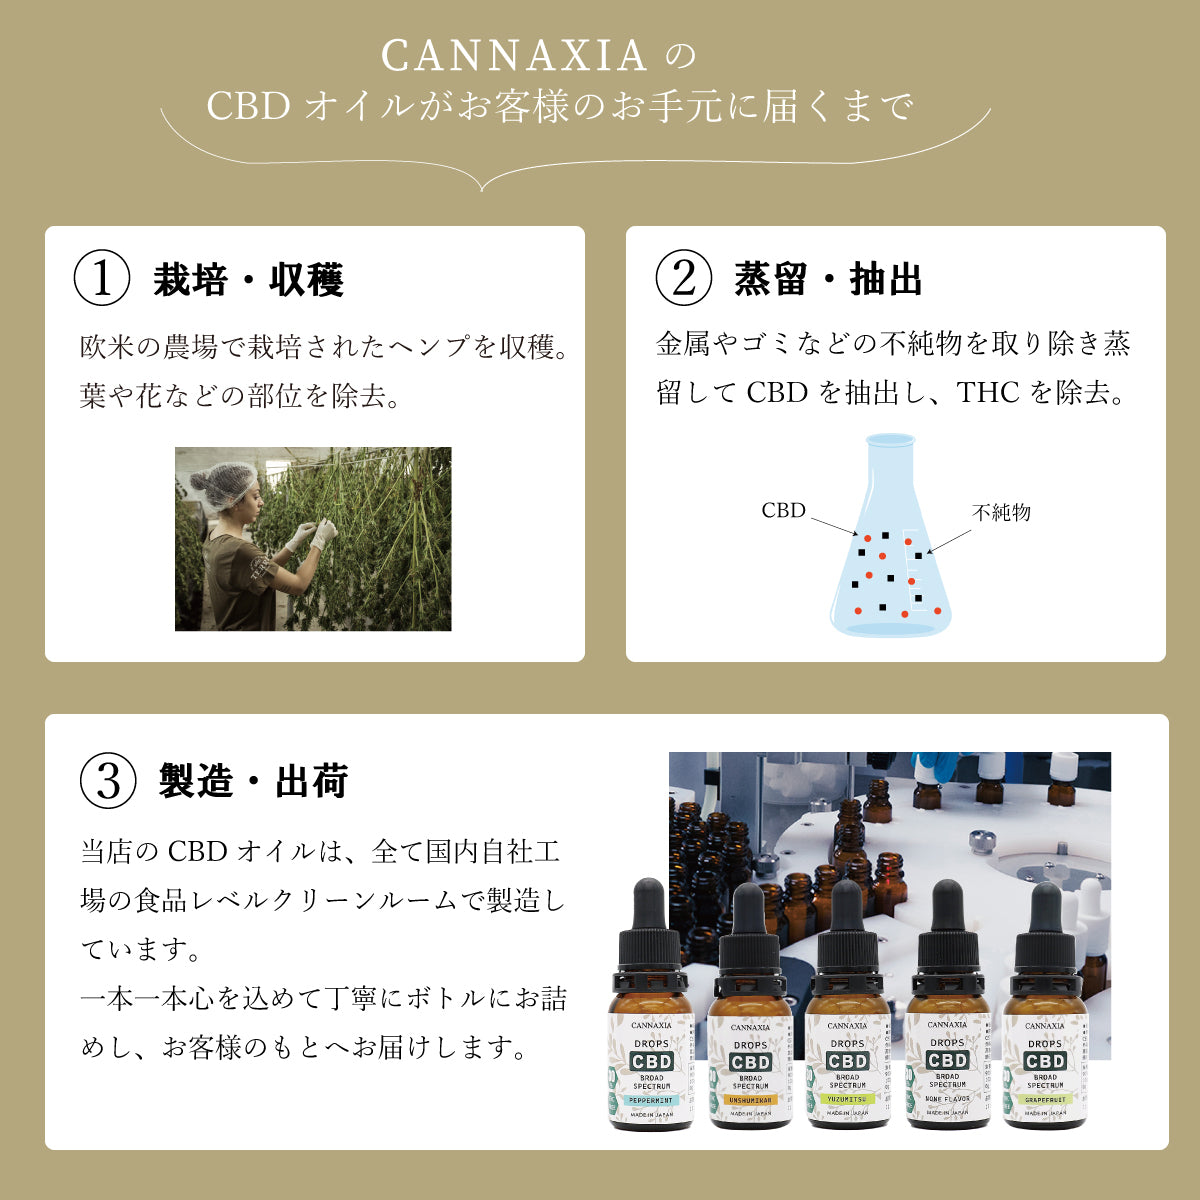 CANNAXIA | CBDオイルの通販 高濃度CBD30% 3,000mg配合 日本製 4種類の 